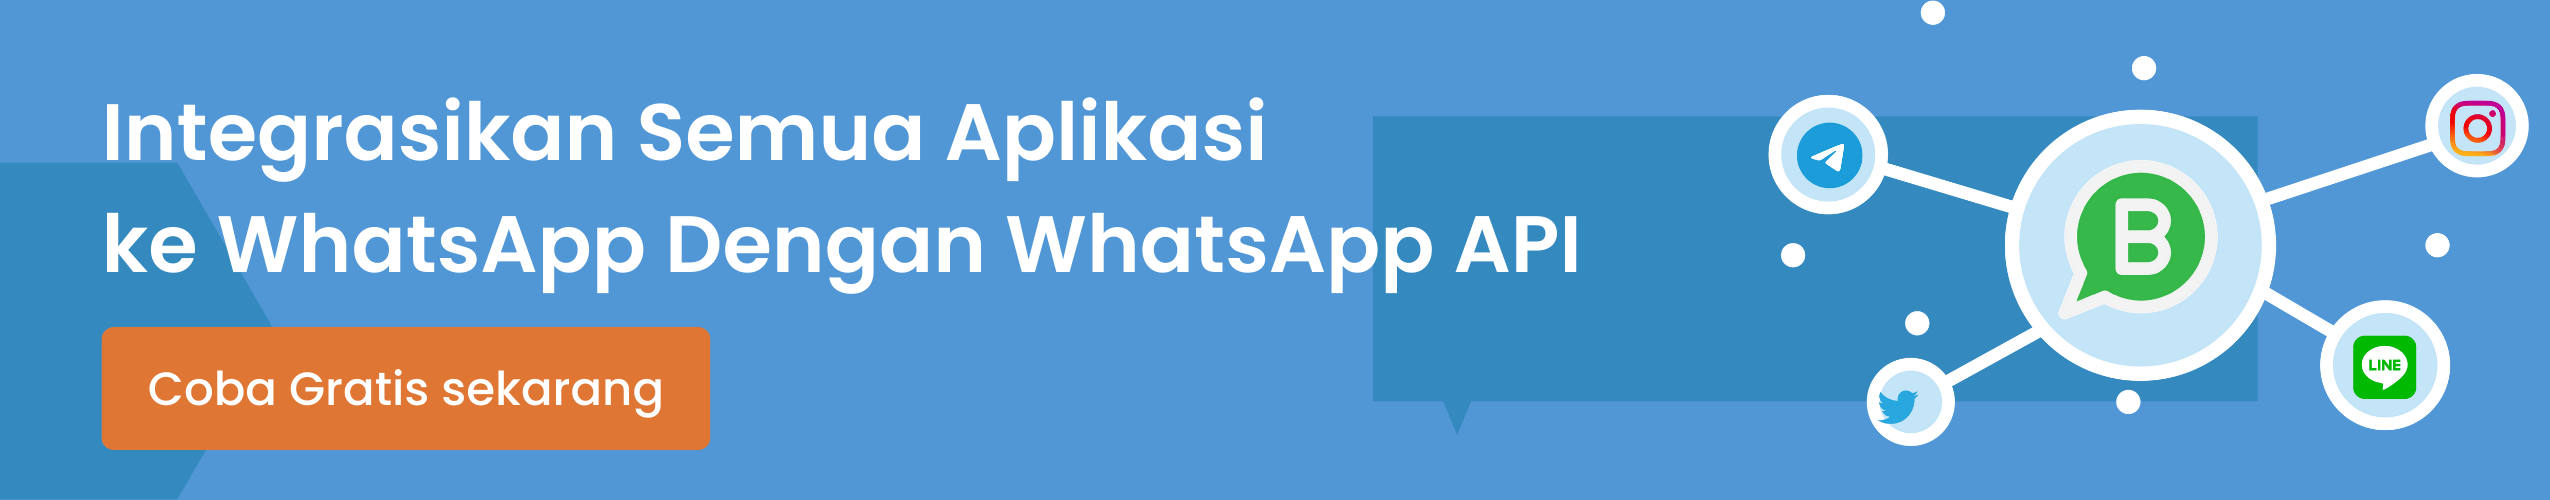 WhatsApp Business API by Barantum